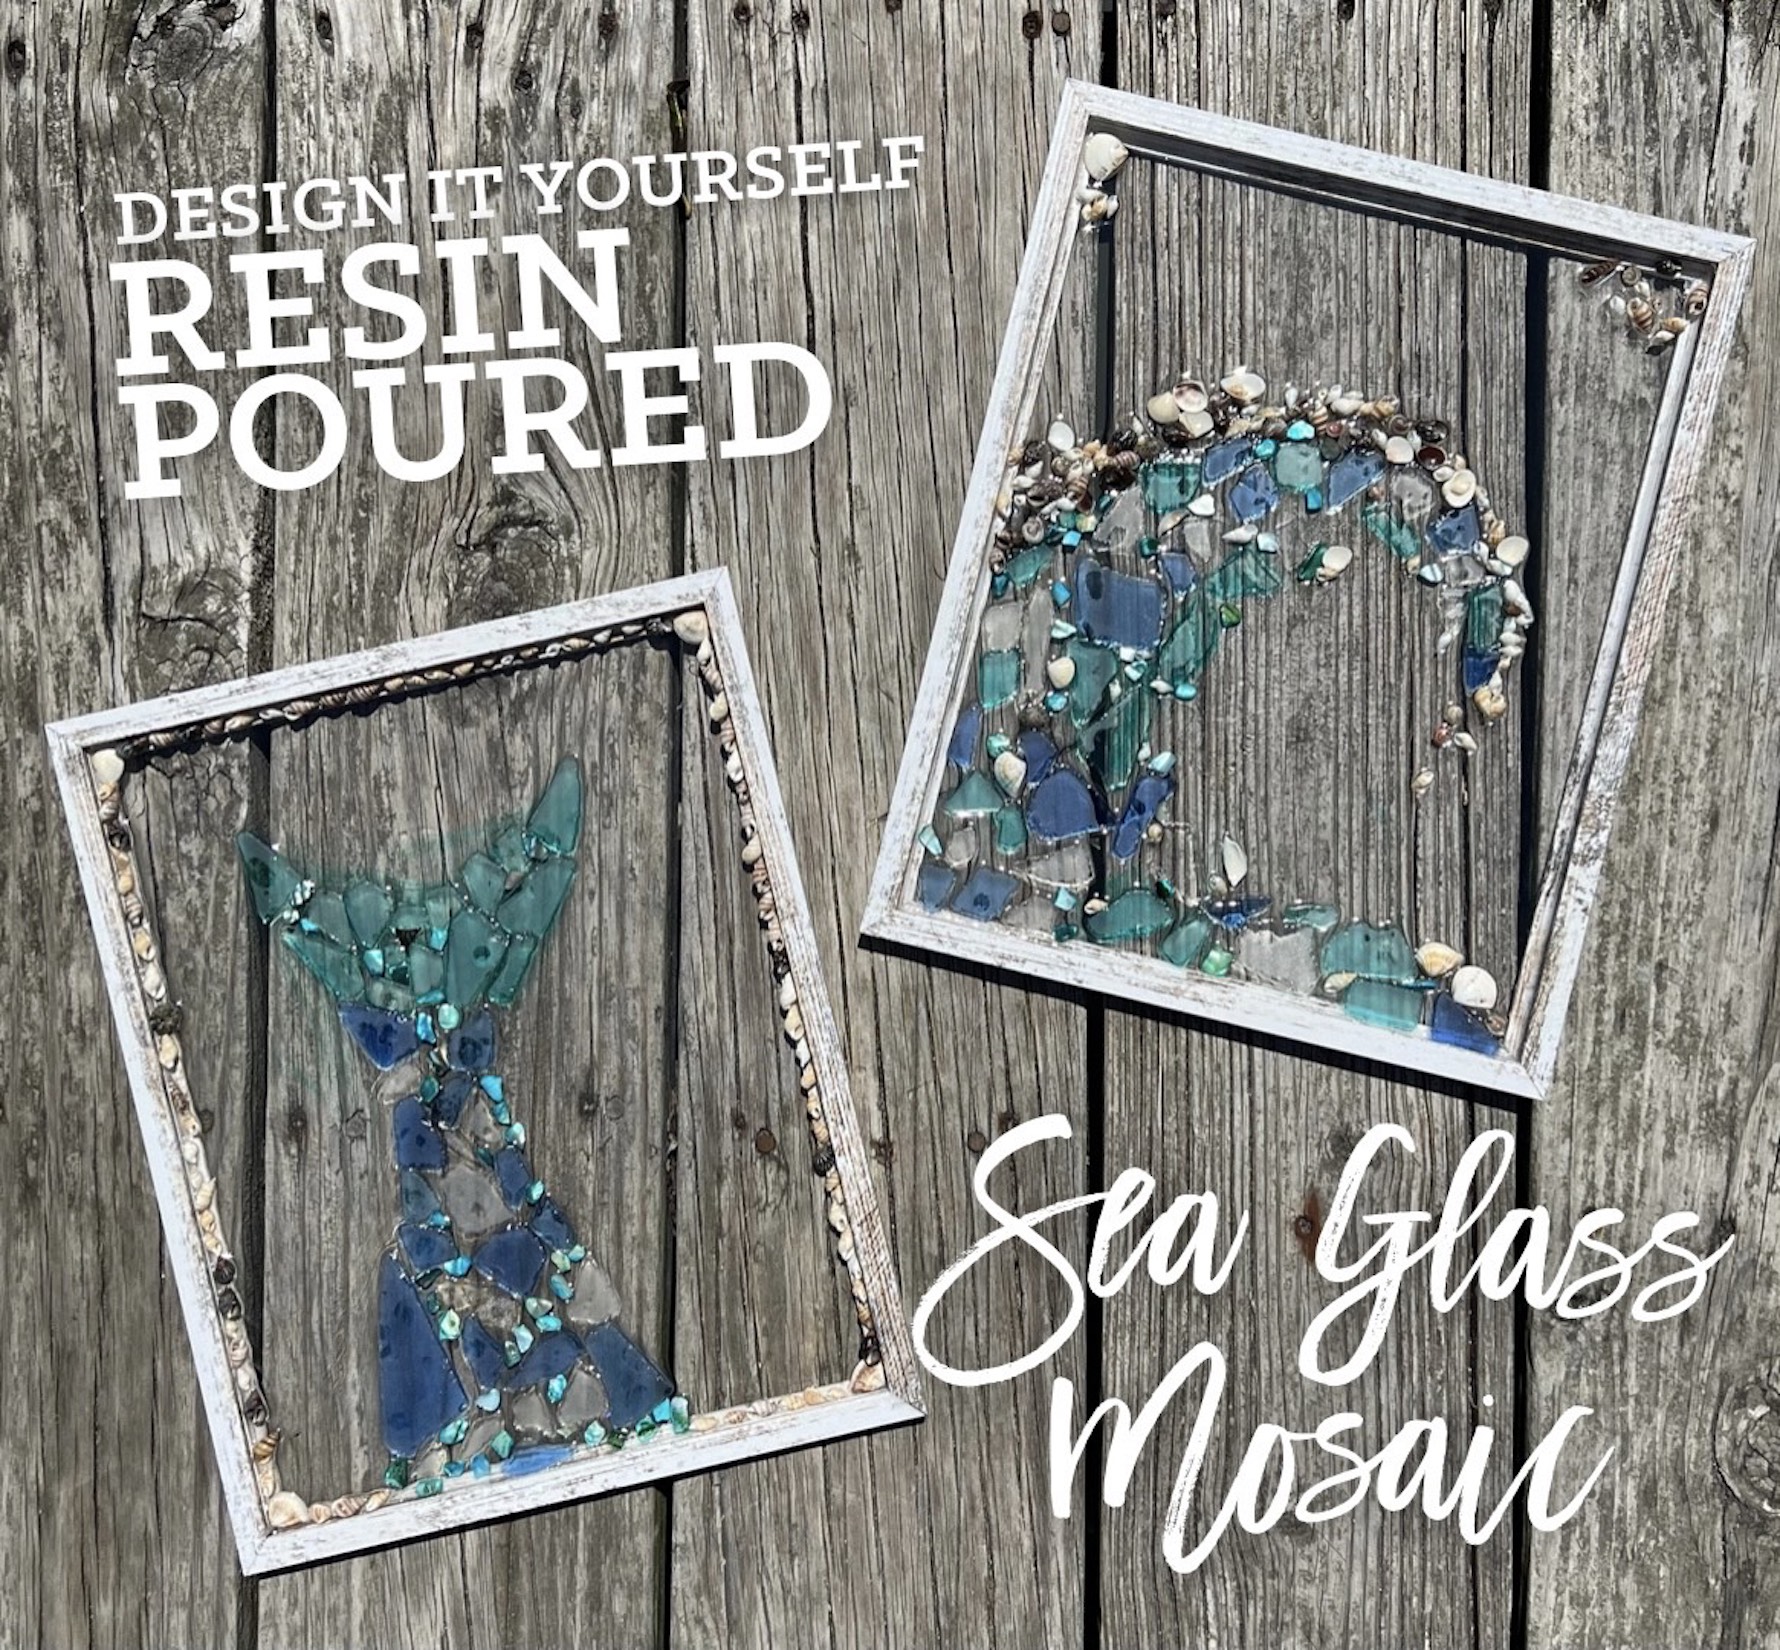 Resin Sea Glass Mosaic Workshop! CHOOSE YOUR DESIGN! 1:00-3:00pm